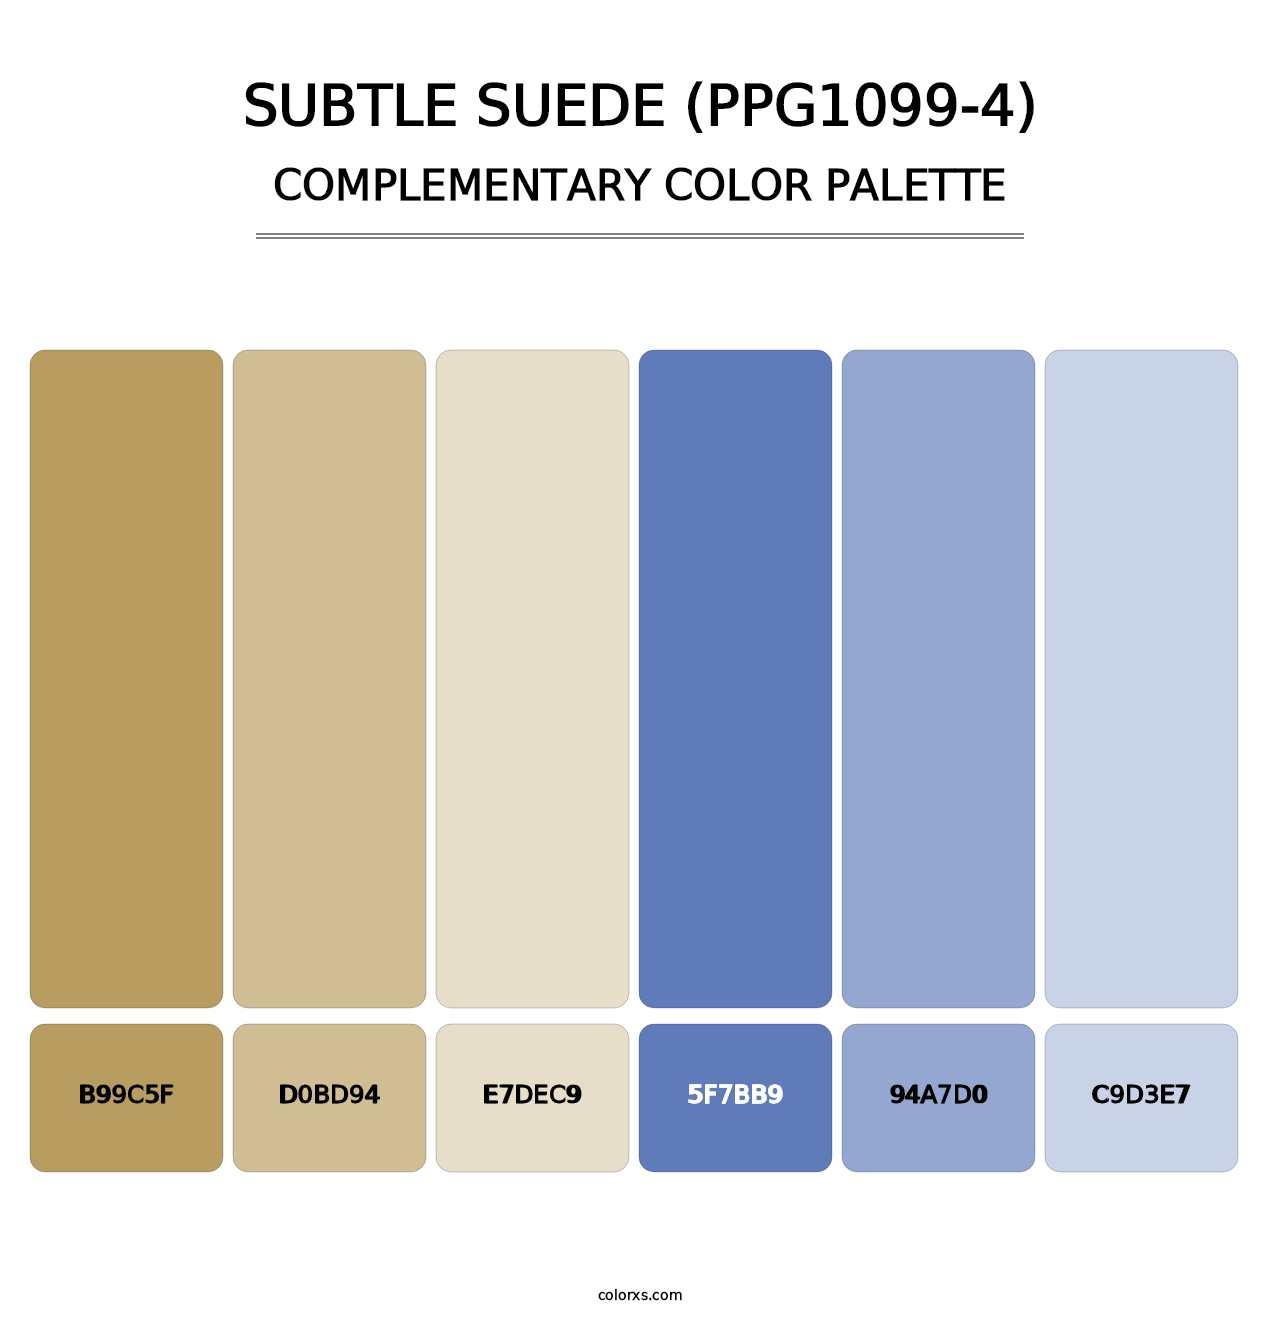 Subtle Suede (PPG1099-4) - Complementary Color Palette